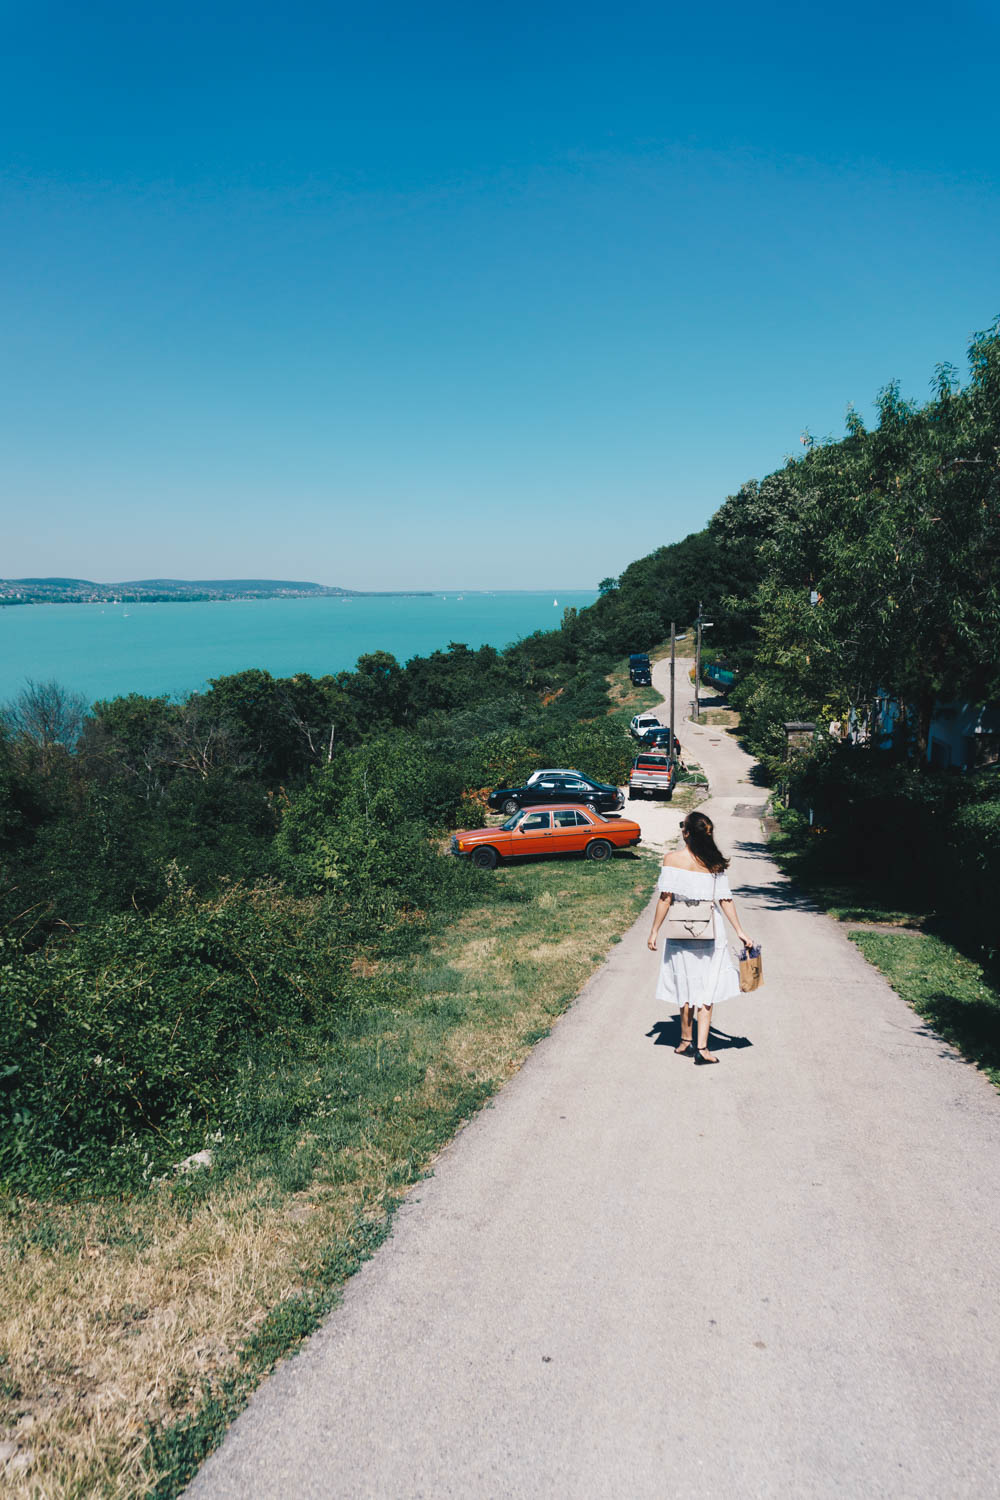 Budapest Hungary Travel Guide / Day Trip / Lake Balaton / Tihany / RG Daily Blog /